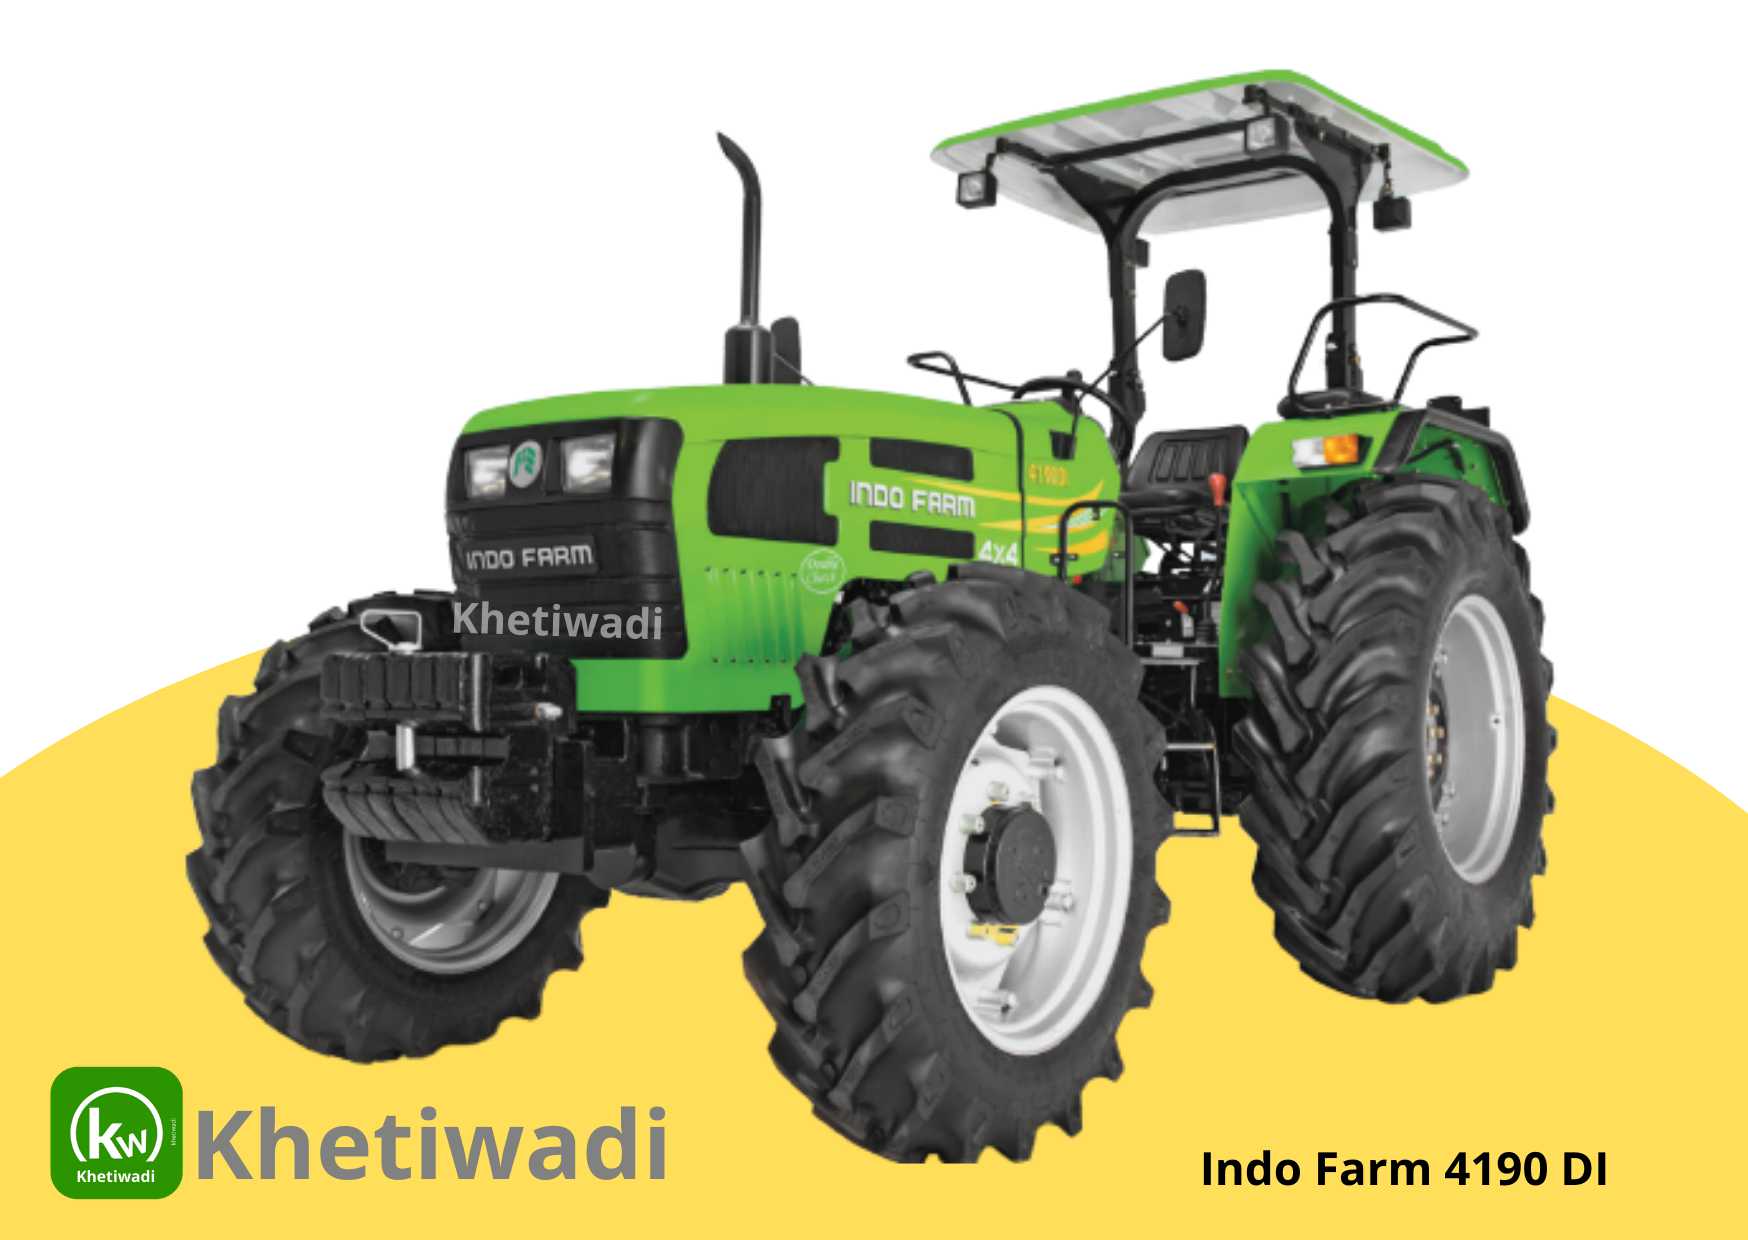 Indo Farm 4190 DI full detail